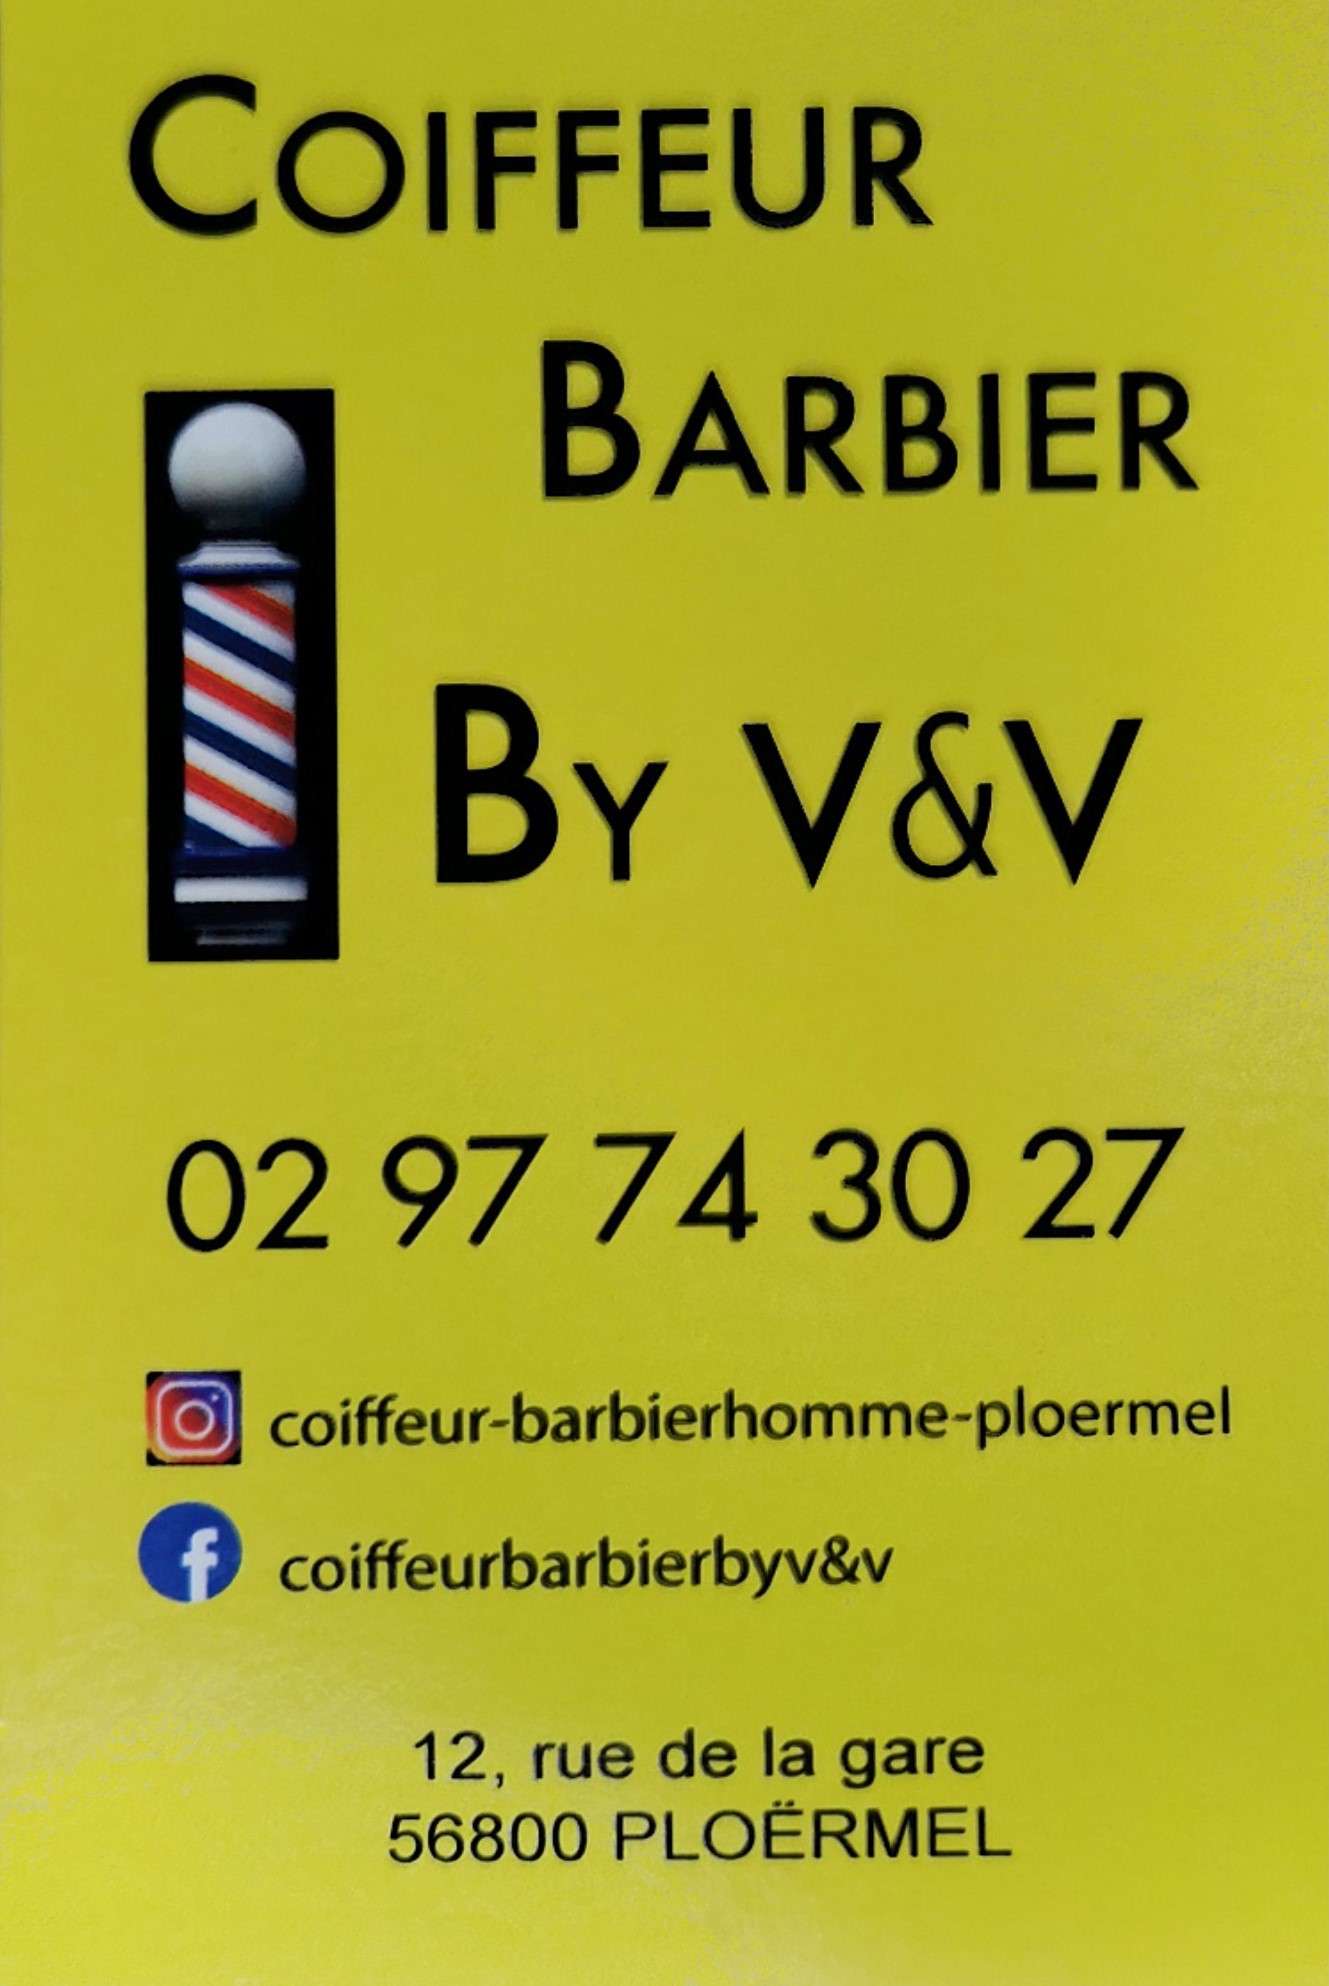 Coiffeur Barbier by V&V